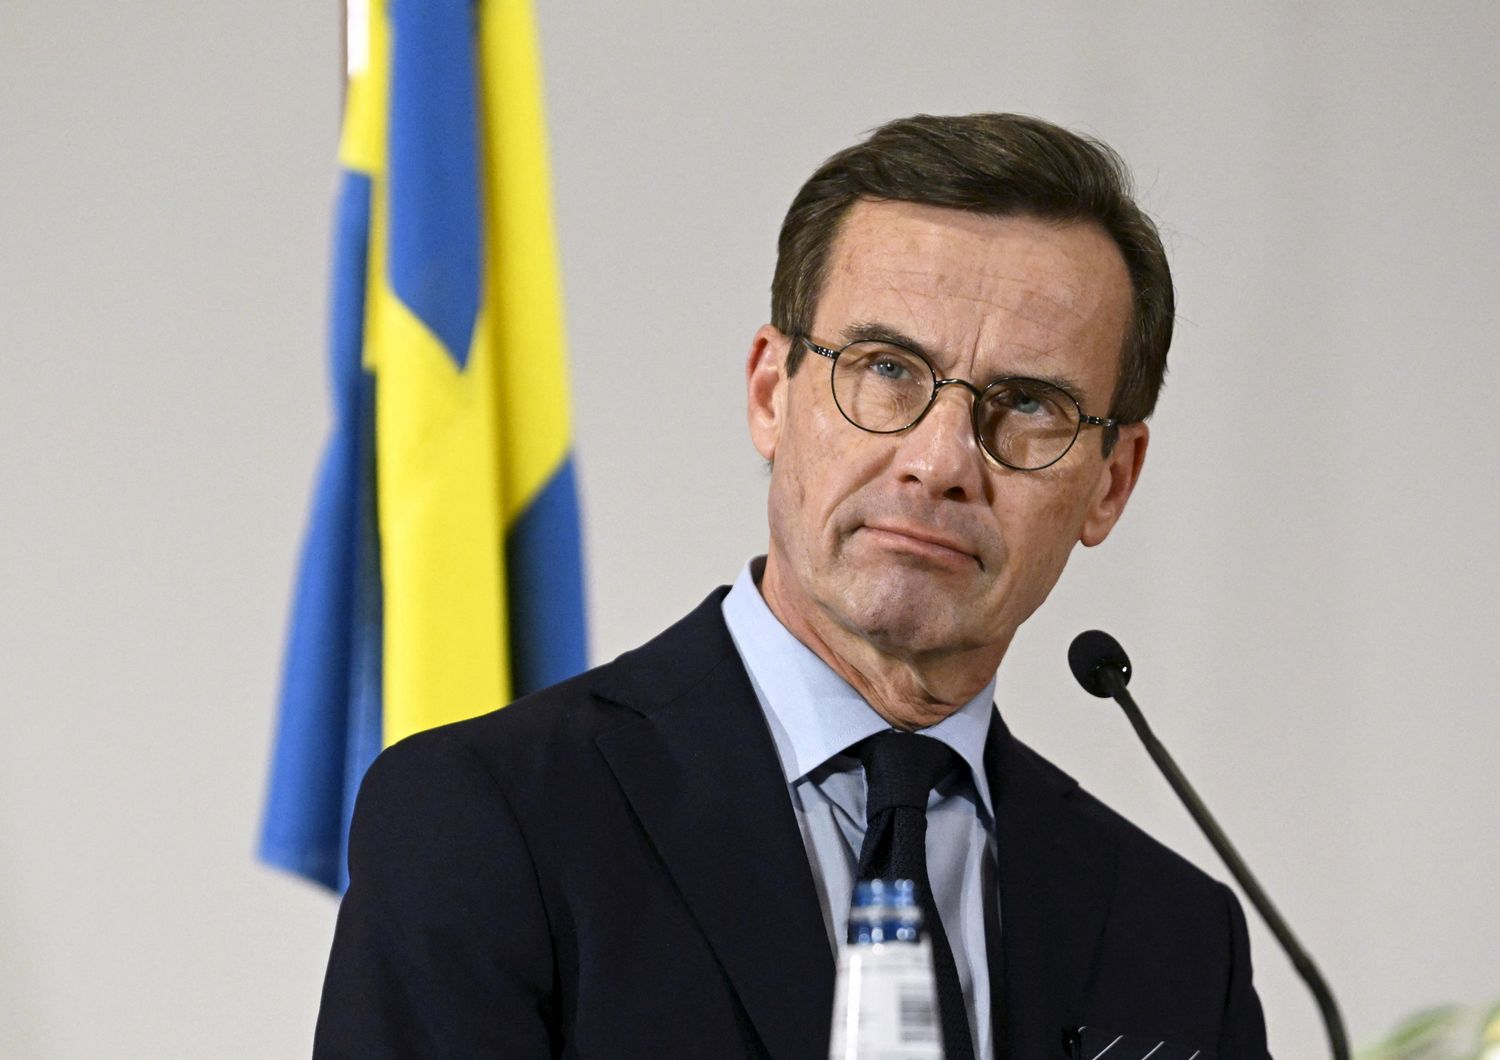 Il premier svedese Ulf Kristersson